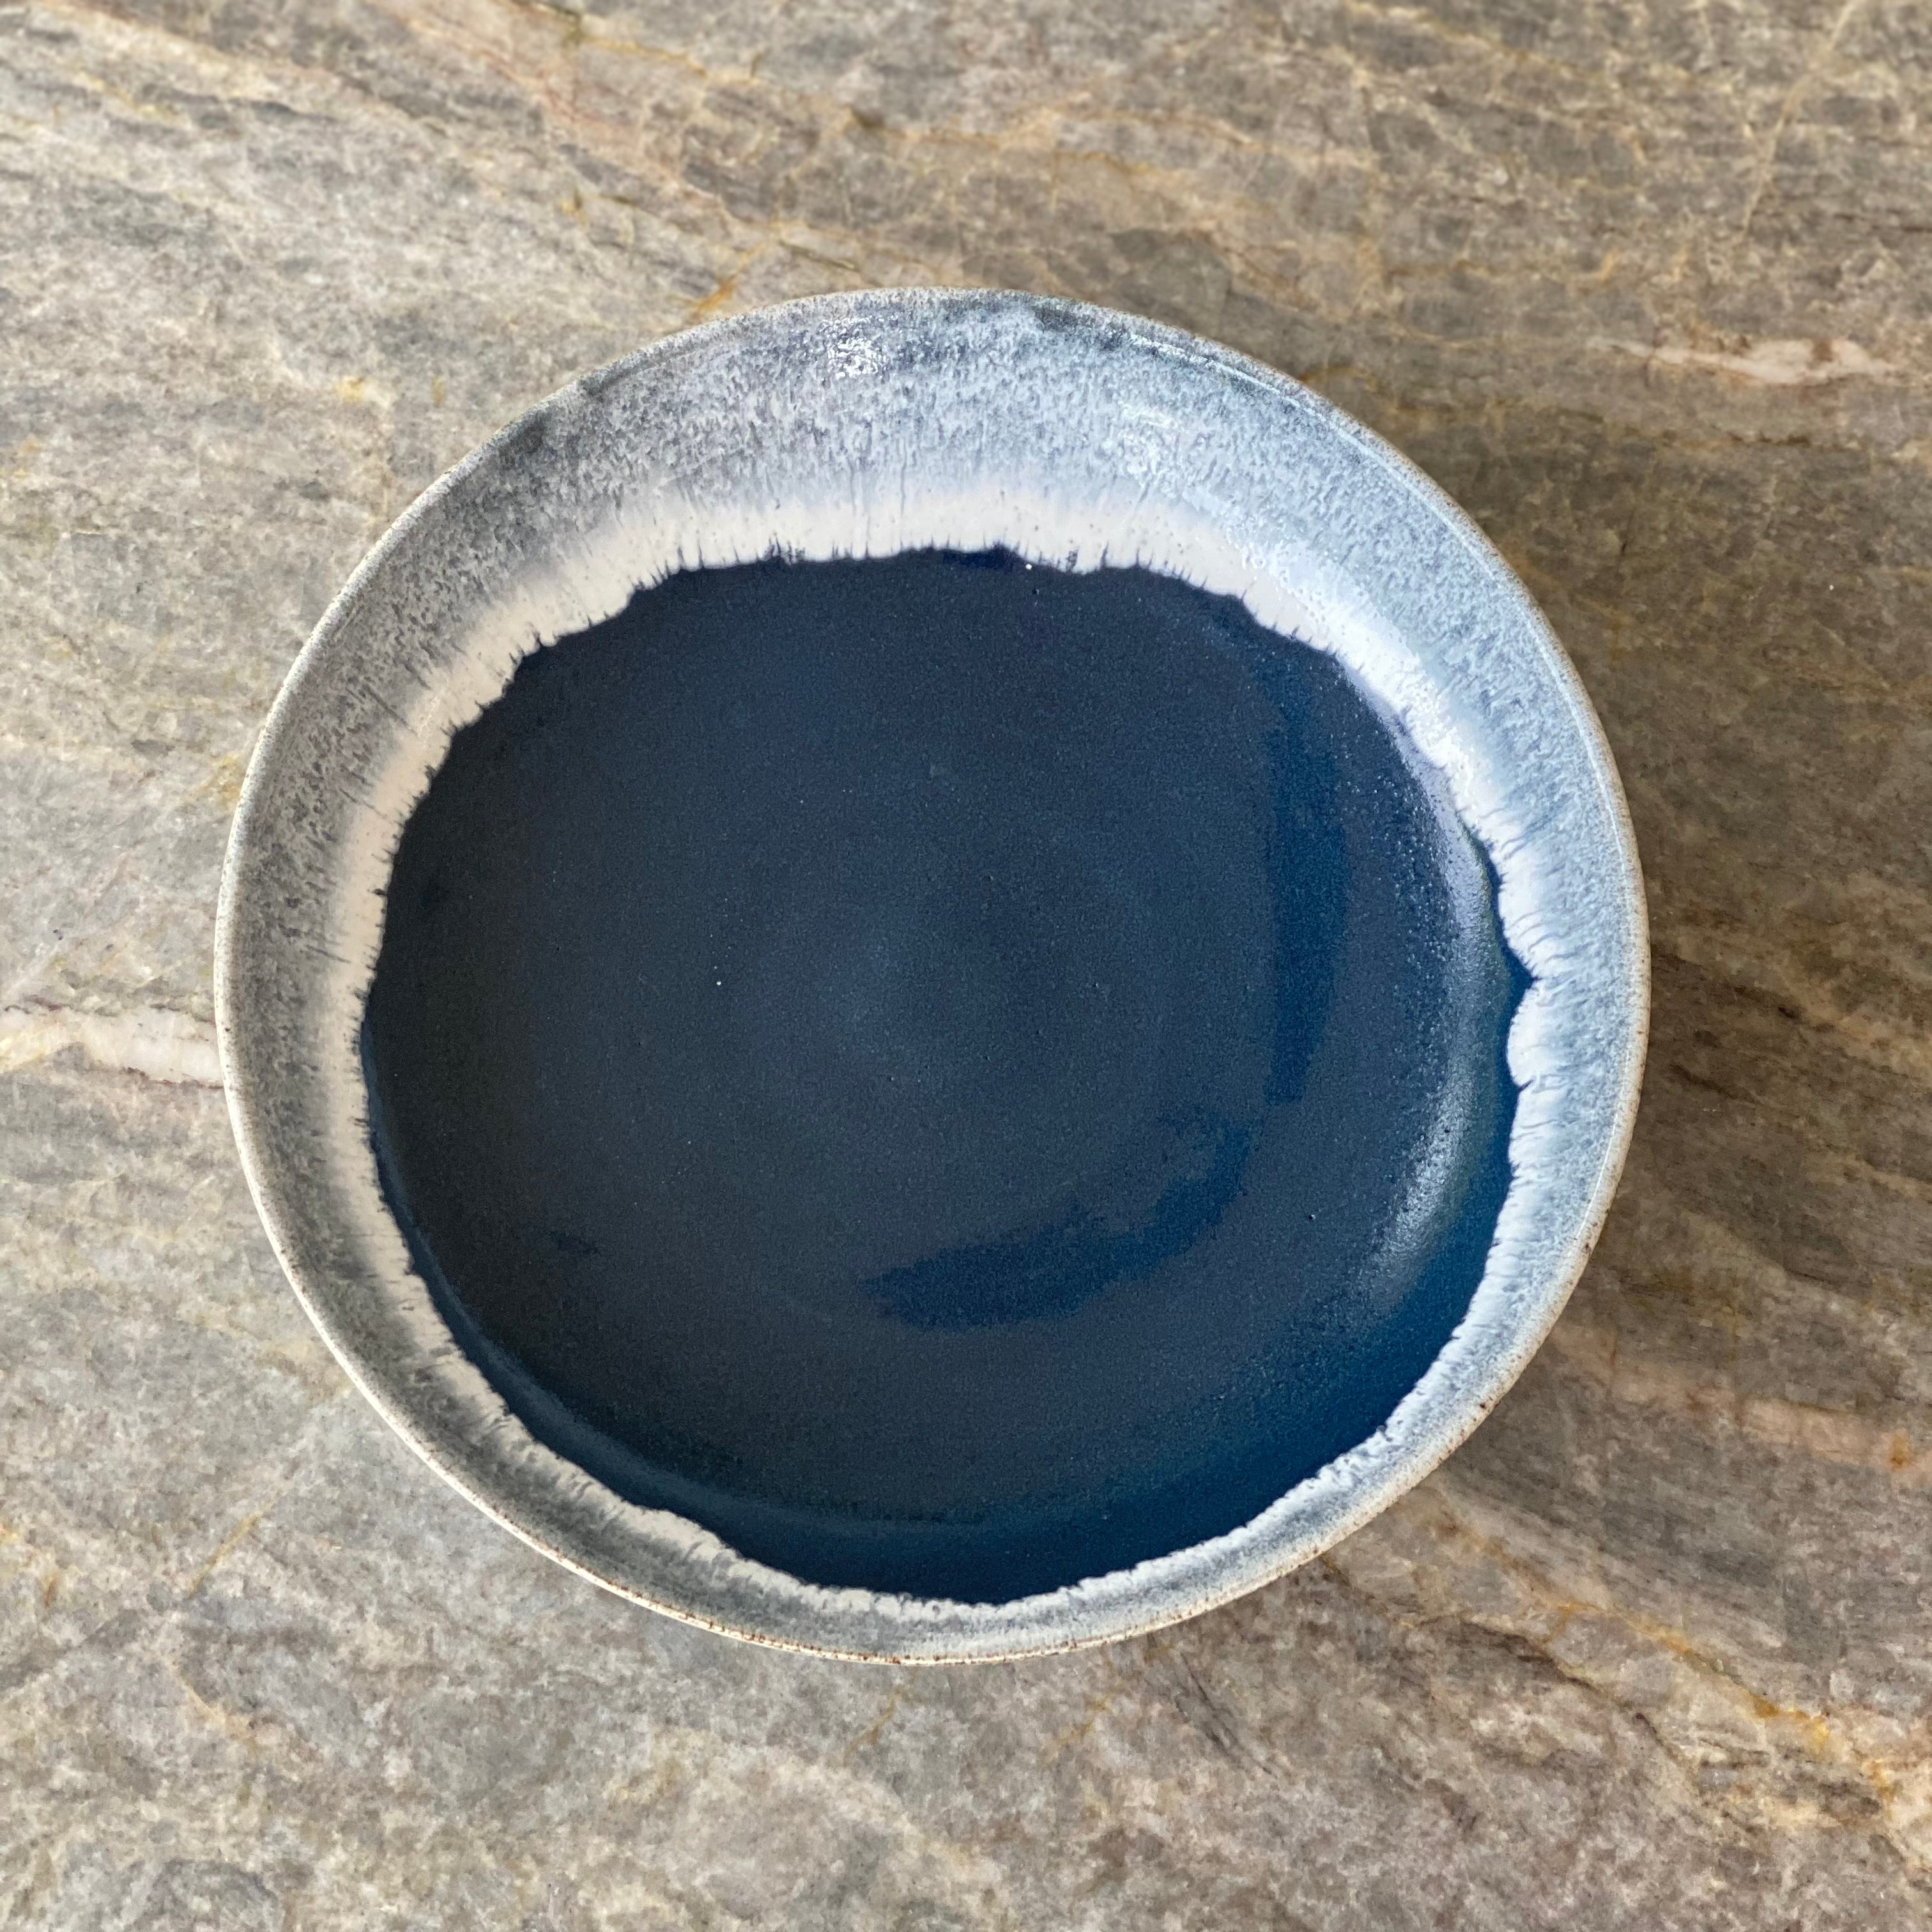 Tasja P poke bowl - white and dark blue